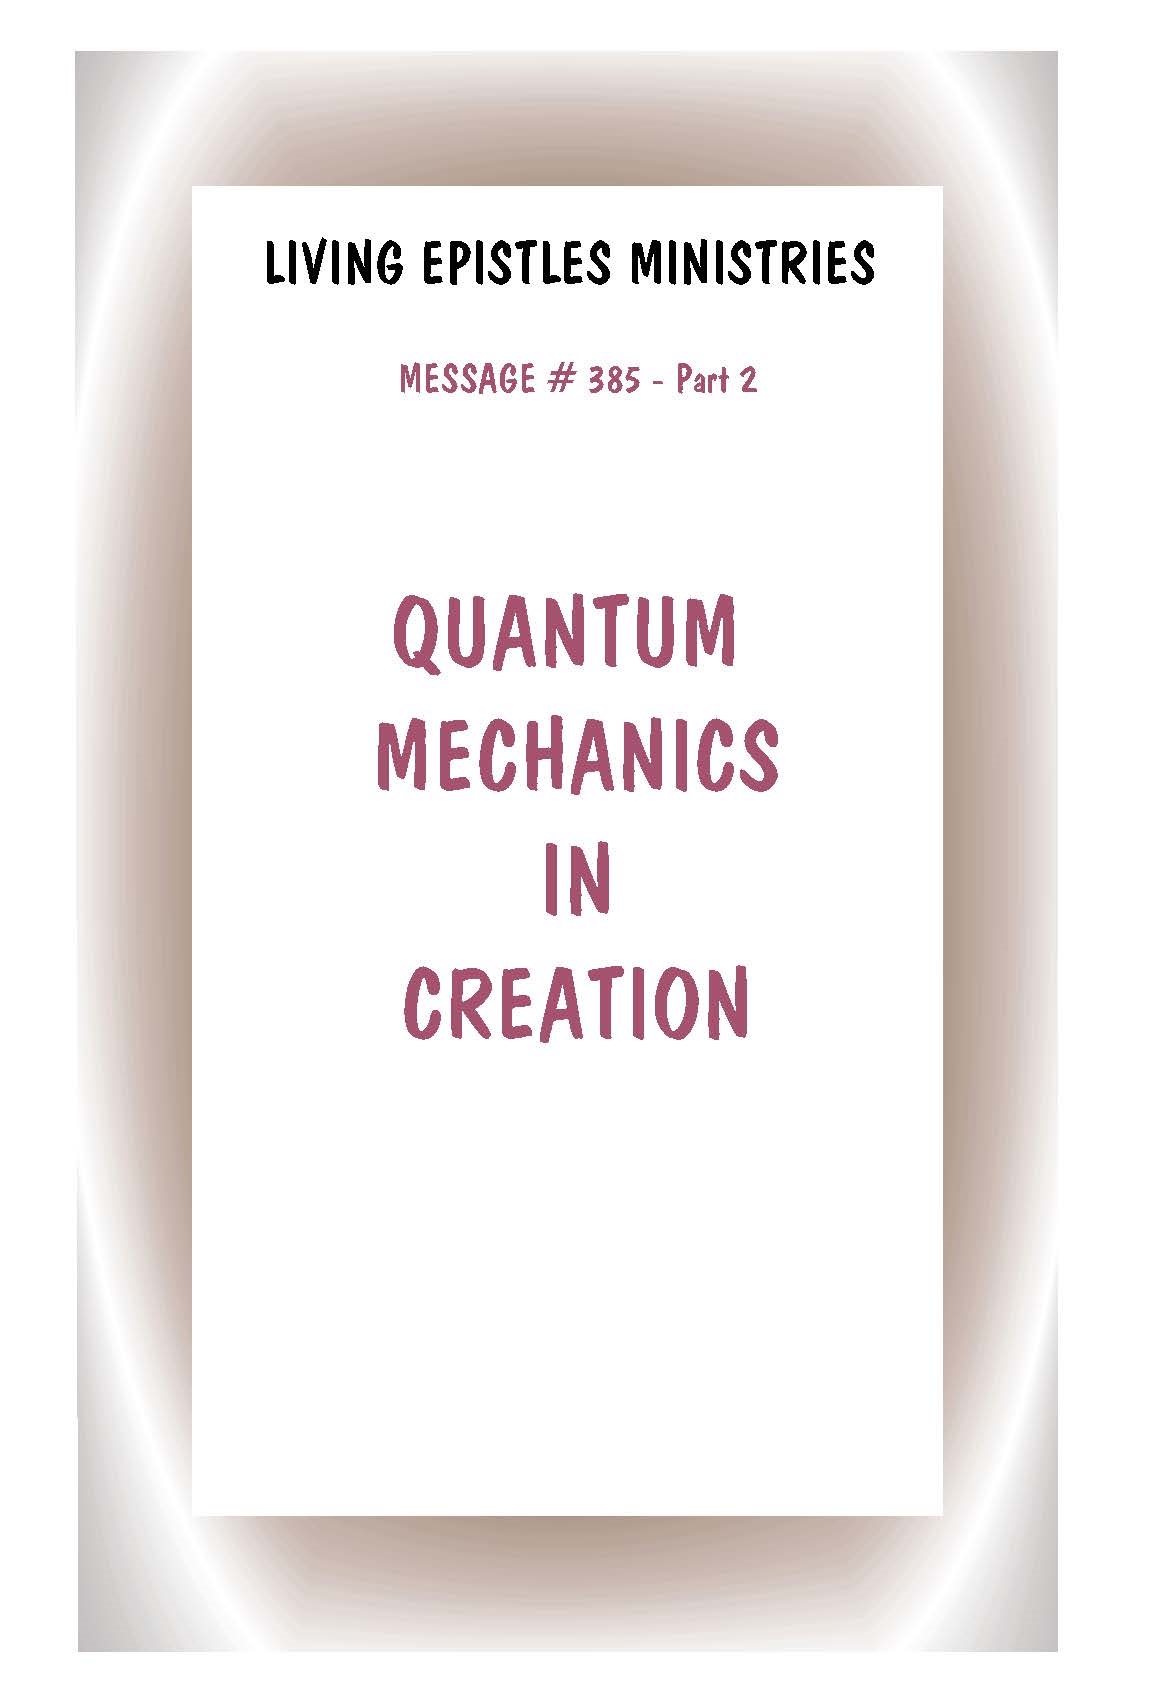 QuantumMechanicsInCreation.LEM.385.02.Cover.040616.72dpi